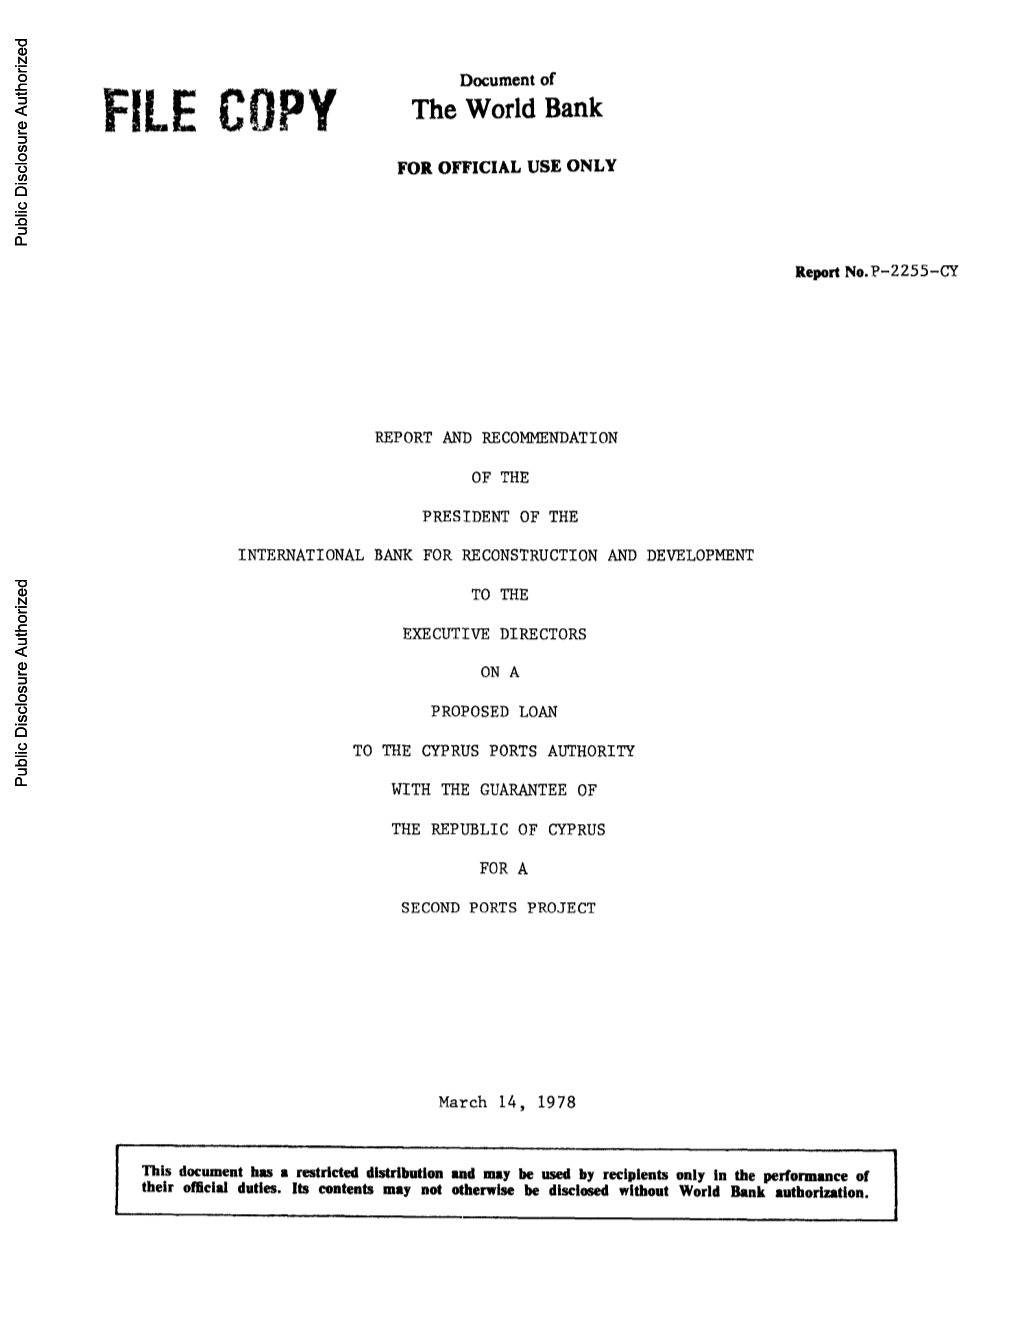 SECOND PORTS PROJECT Public Disclosure Authorized March 14, 1978